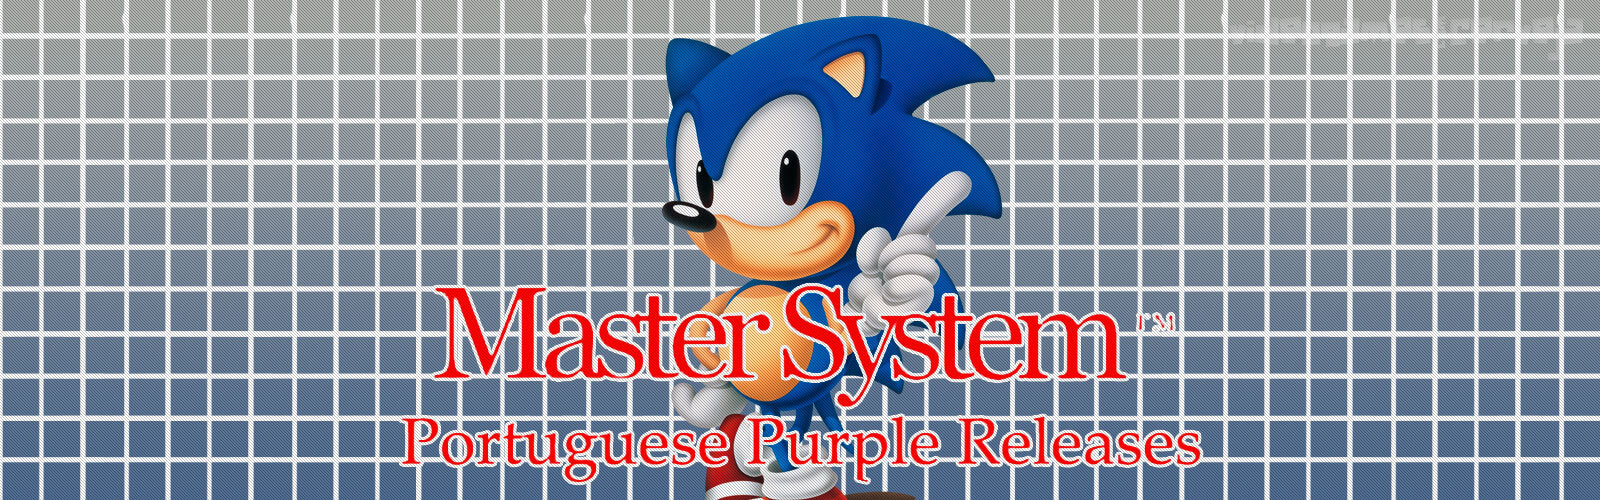 Lista de jogos de Master System Portuguese Purple Releases Cover